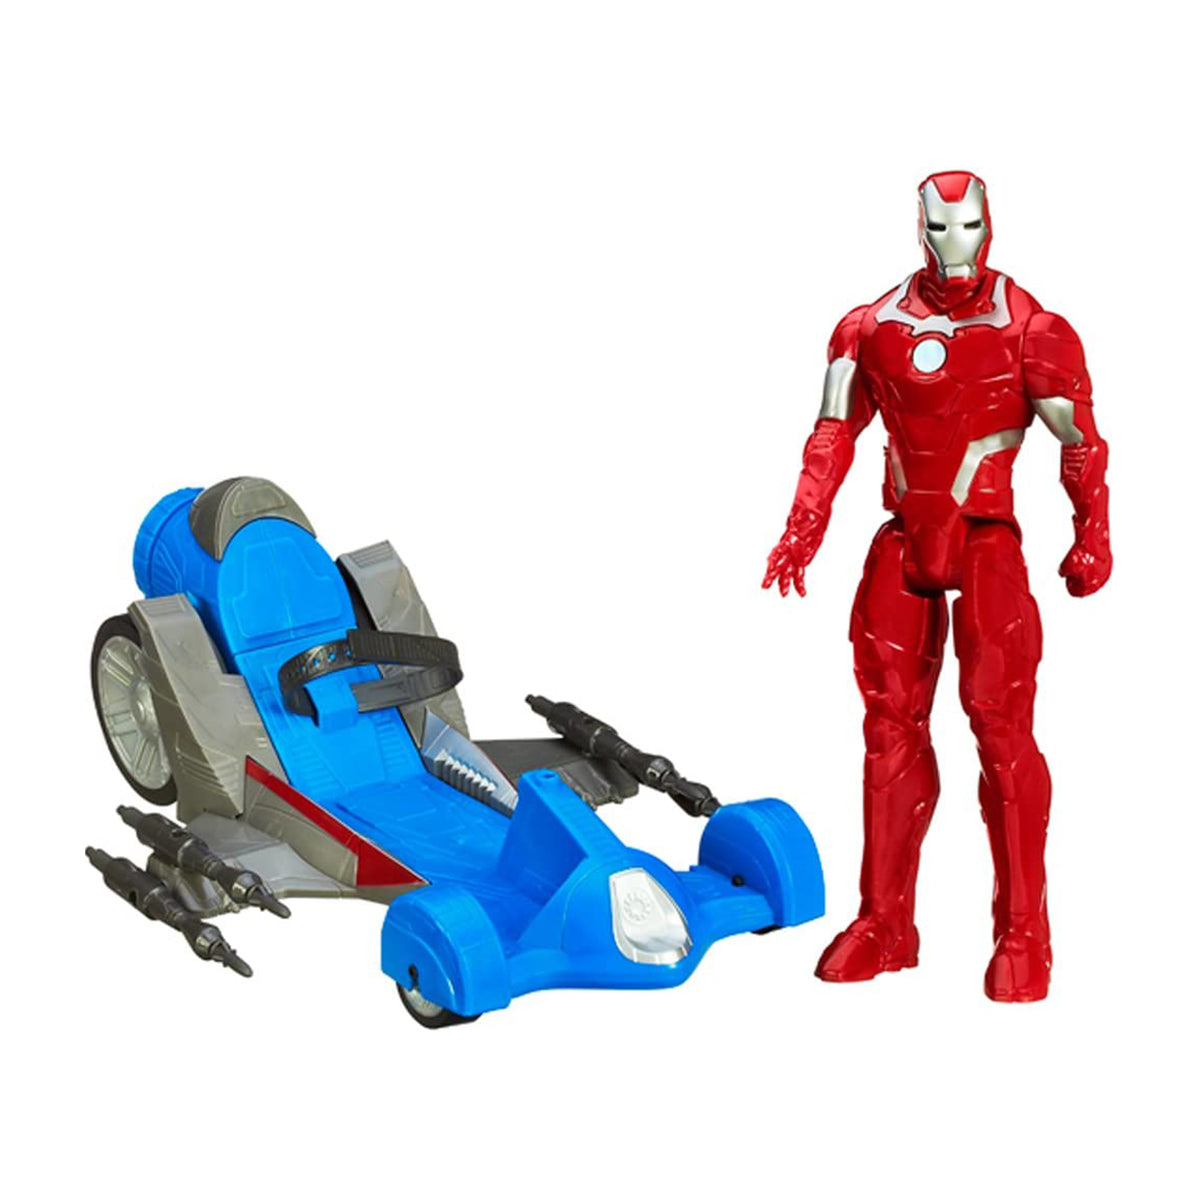 Marvel - Iron Man Battle Racers 30 cm